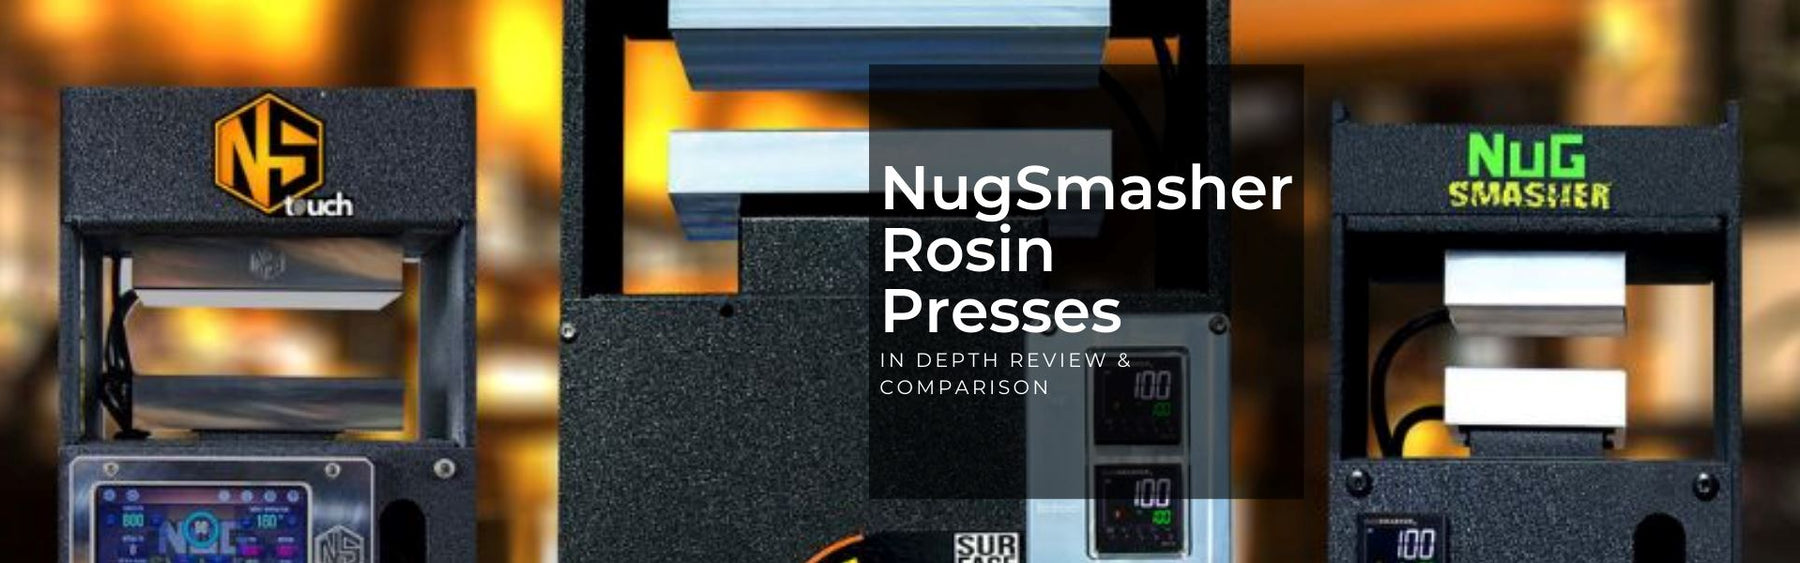 NugSmasher Rosin Presses Review